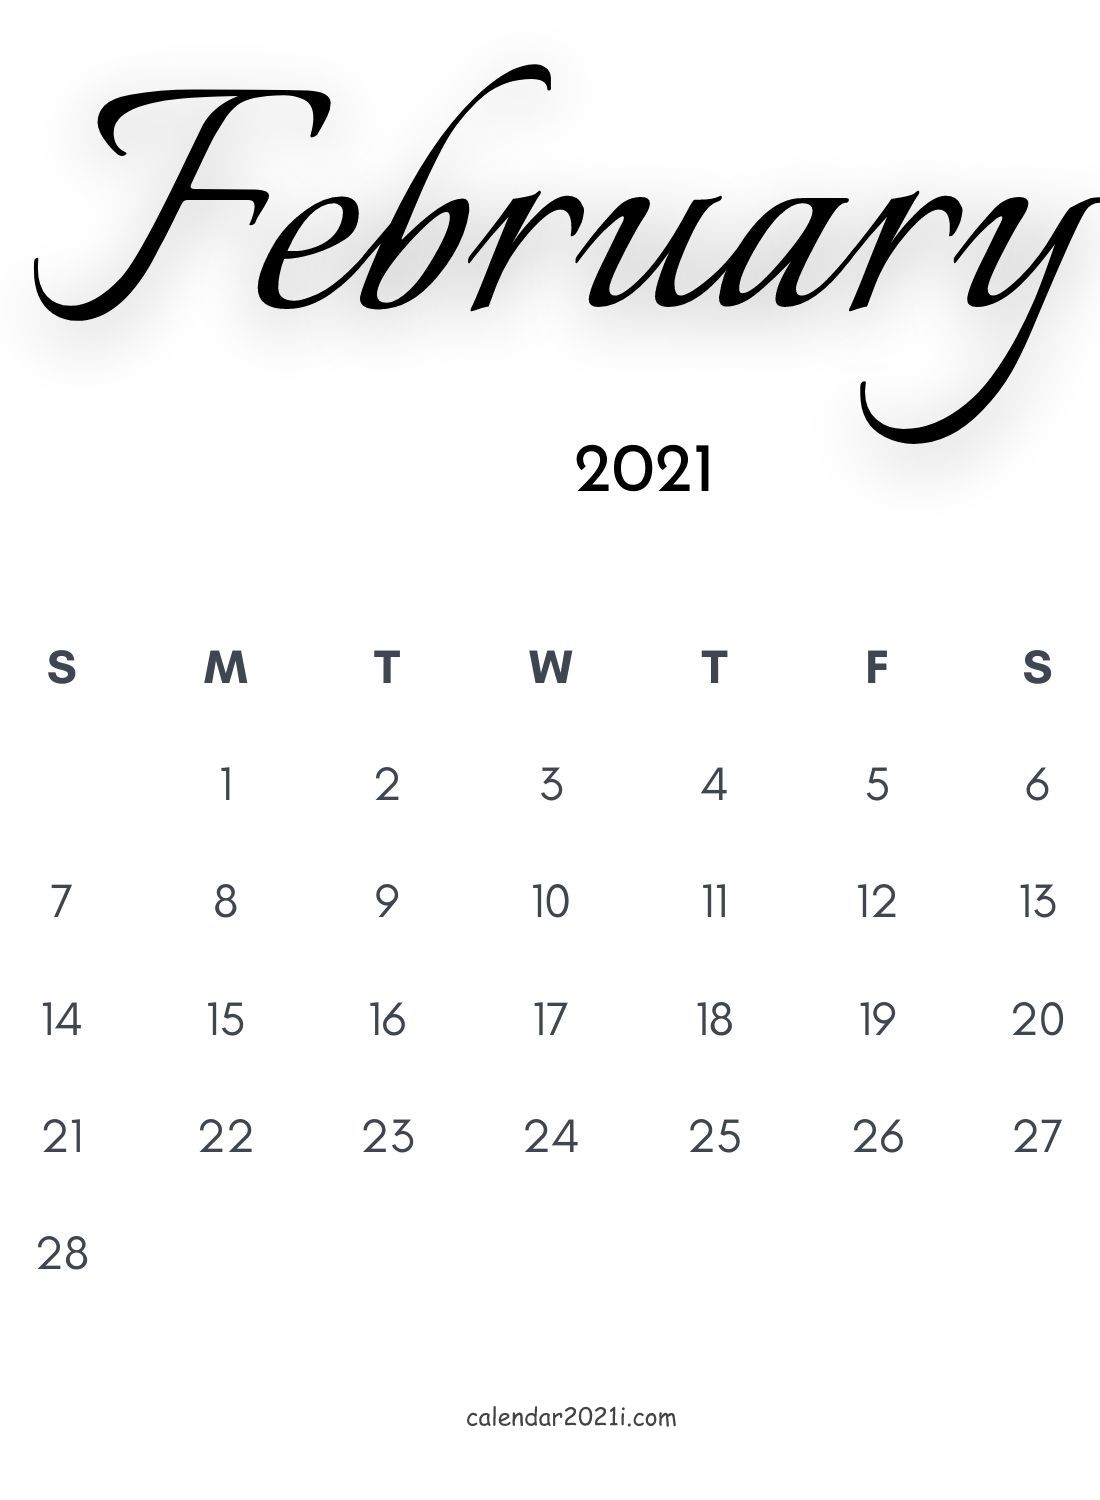 February 2021 Calligraphy Calendar